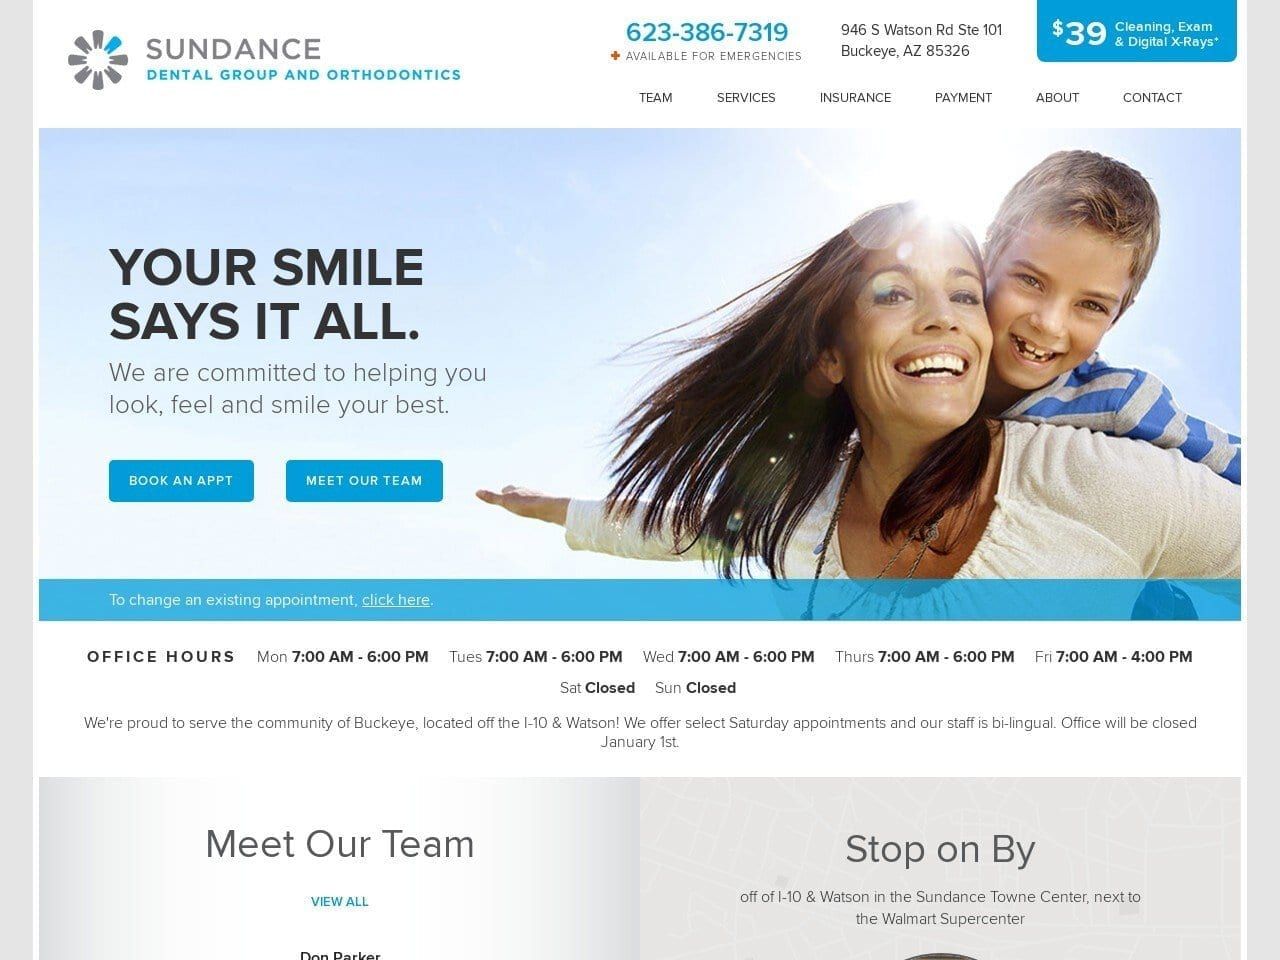 Sundance Dental Group Website Screenshot from sundancedentalgroup.com